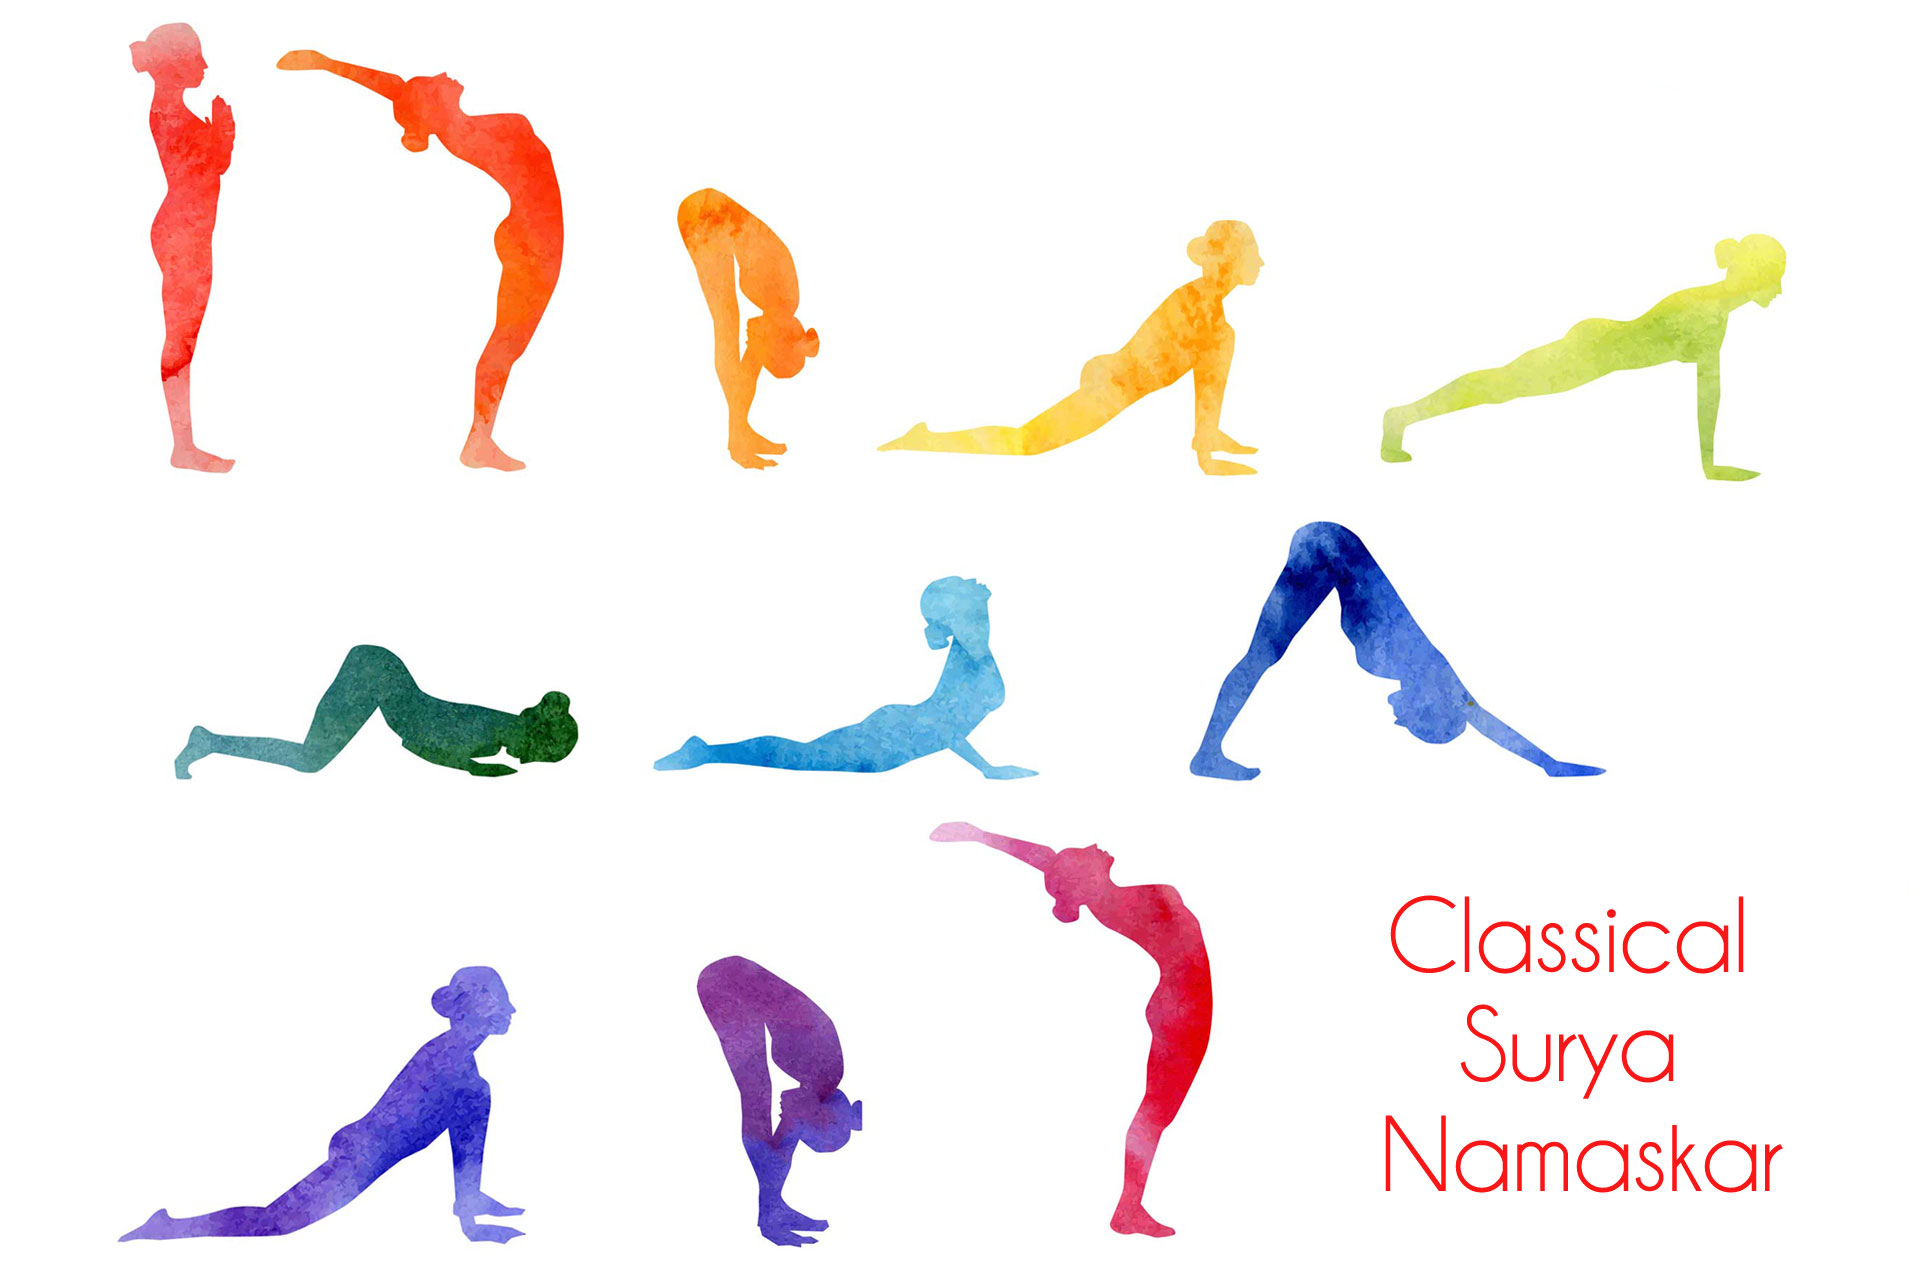 Classical Surya Namaskar | Purna Yoga 828